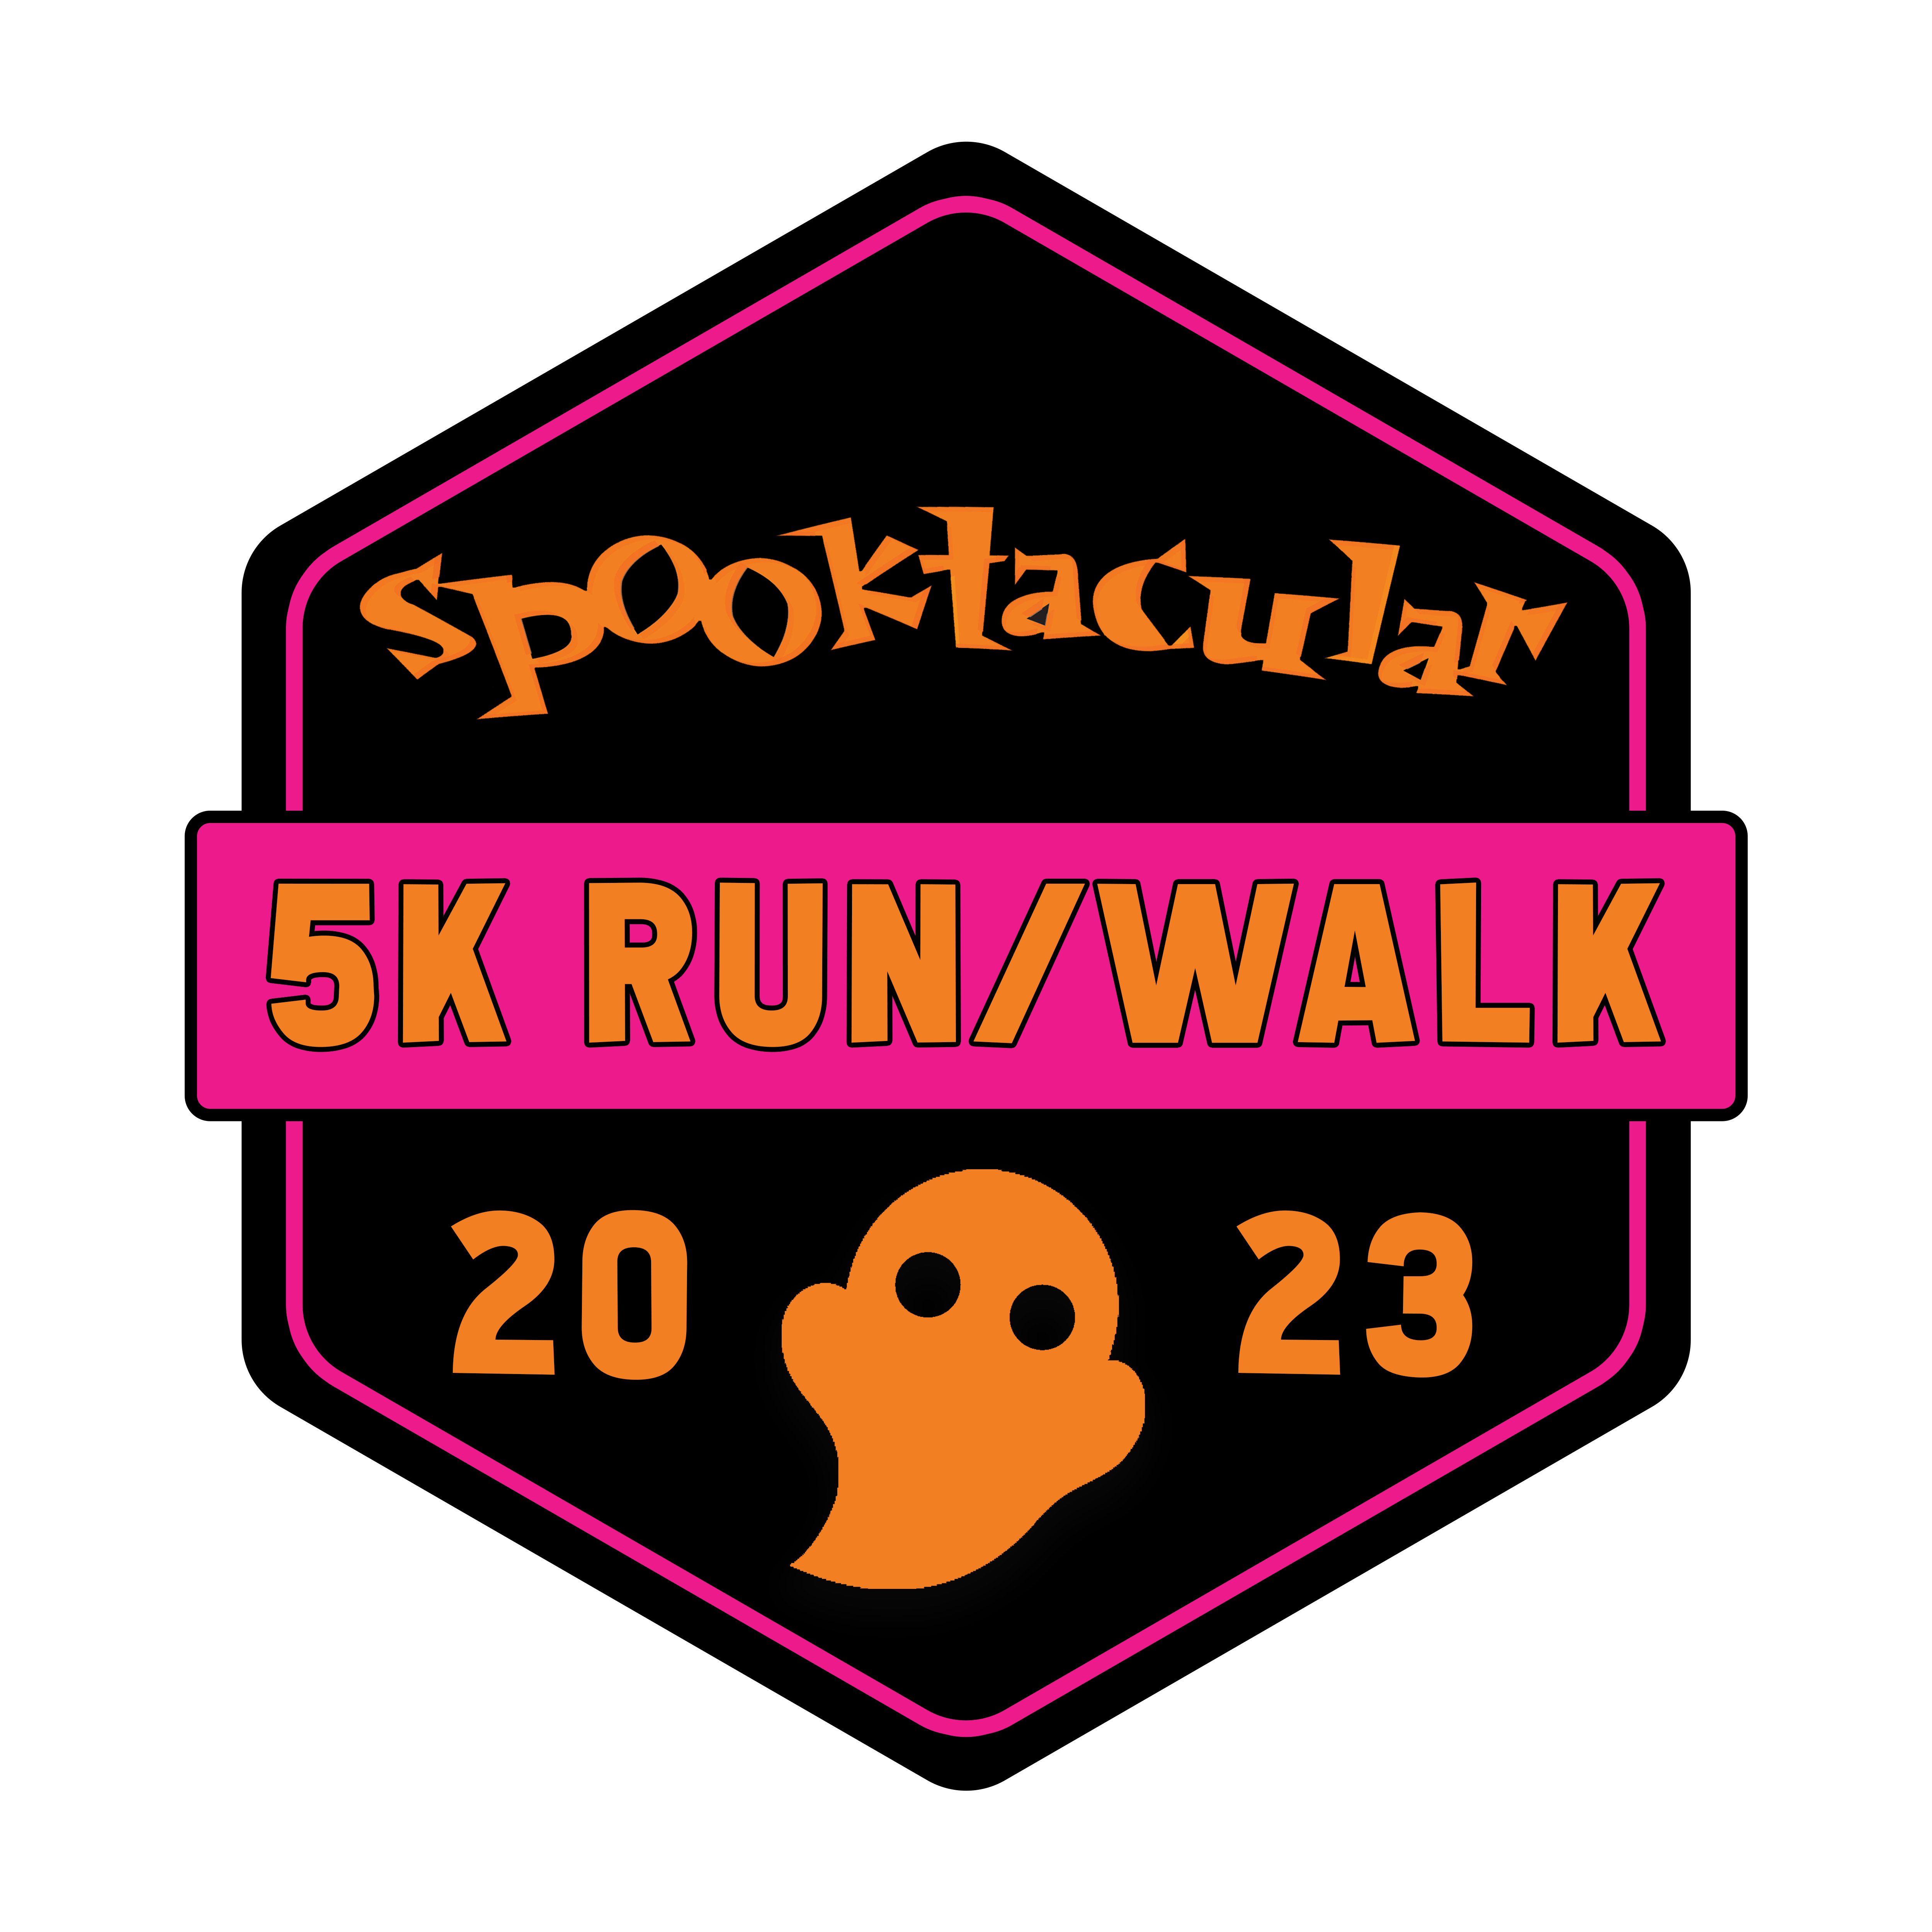 Spooktacular 5K (NY) logo on RaceRaves